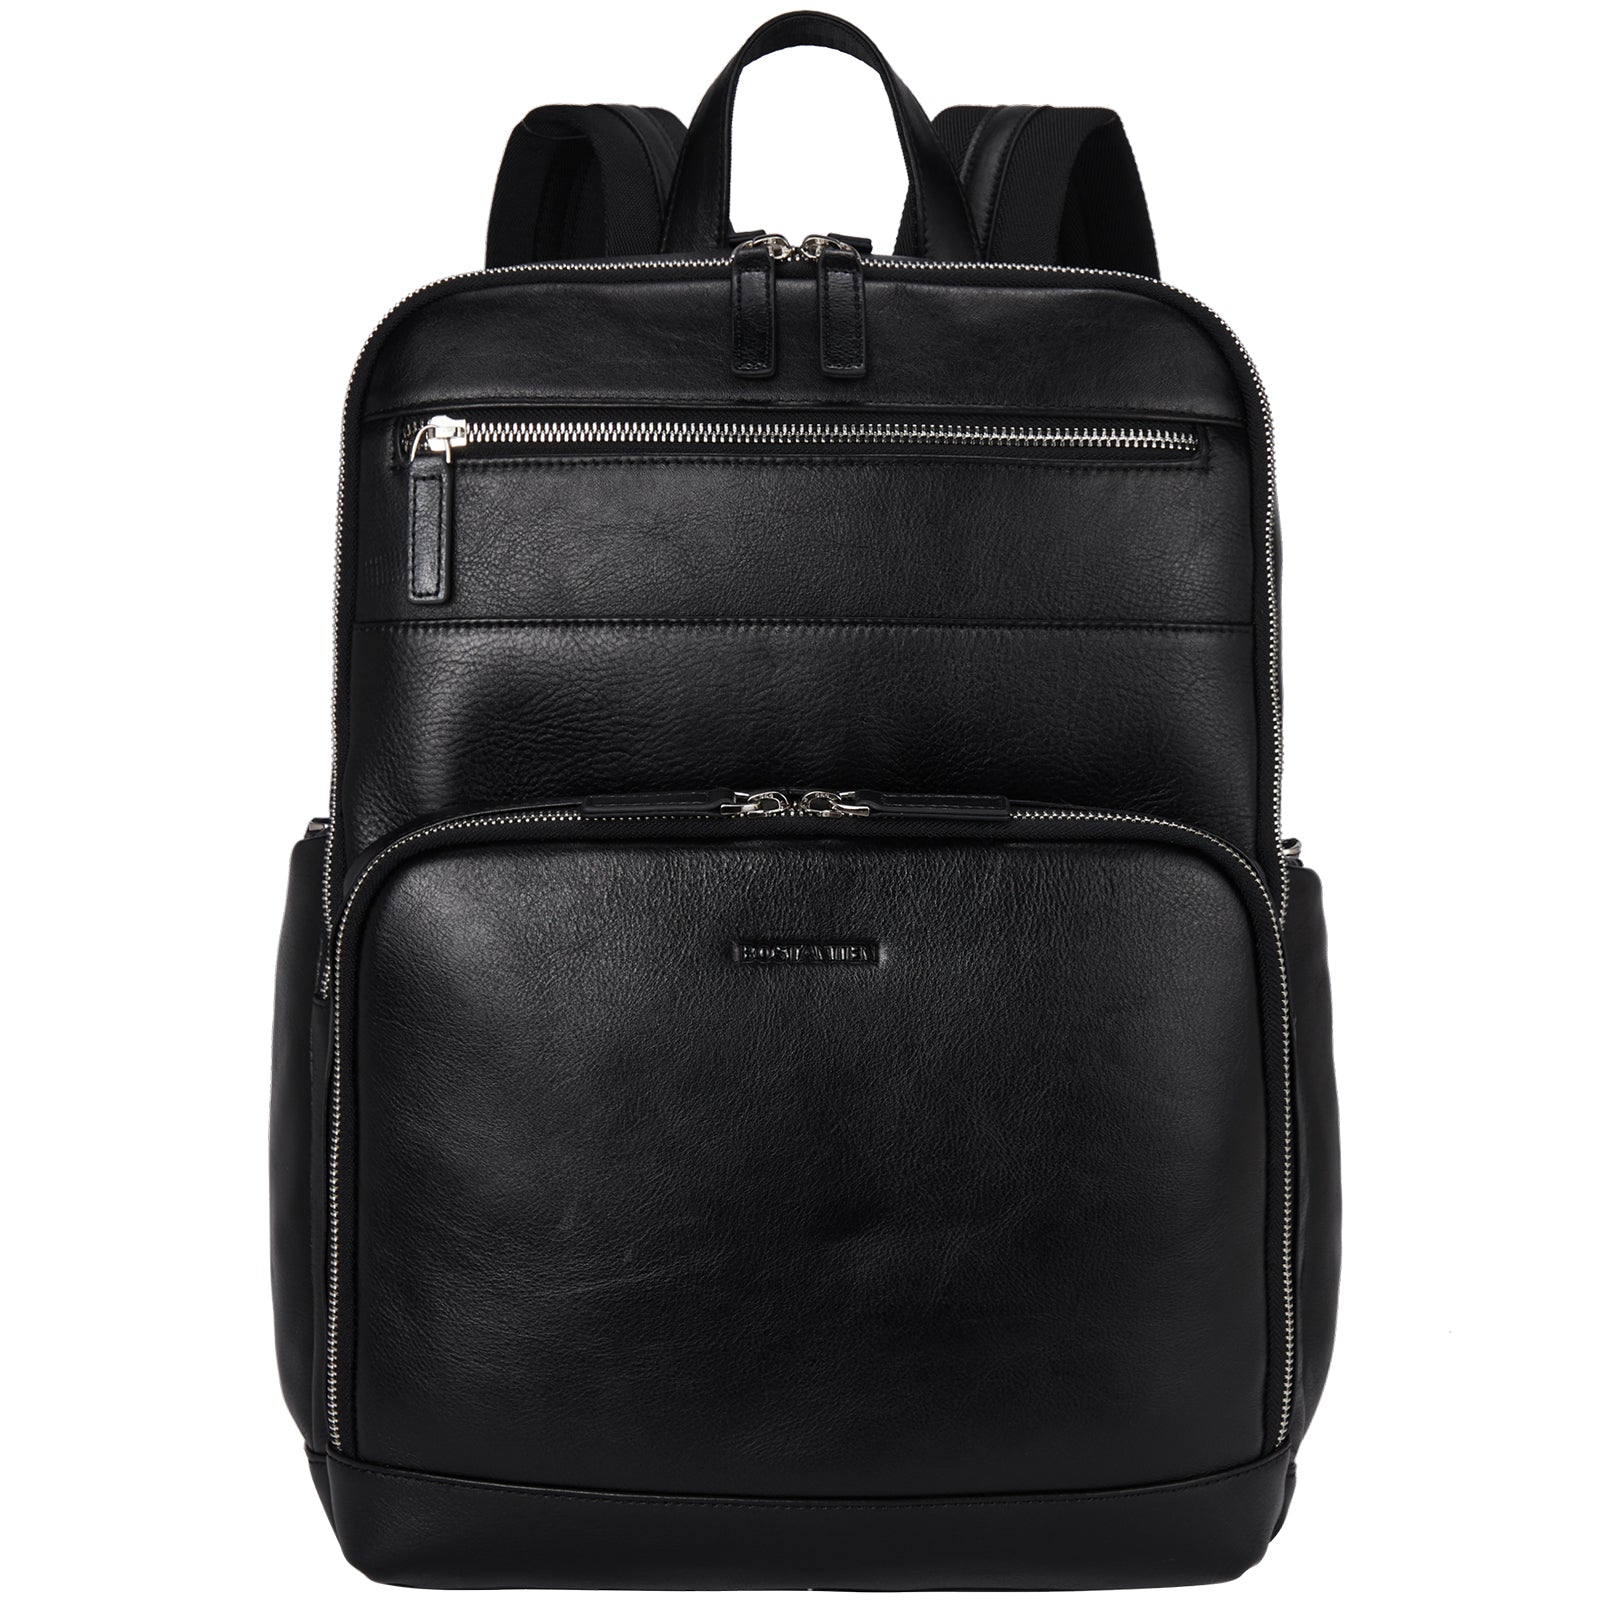 SAMSONITE Move 2.0 34 cms Dark Red Casual Backpack (SAM MOVE 2.0 BACKPACK  DARK RED) : Amazon.in: Fashion